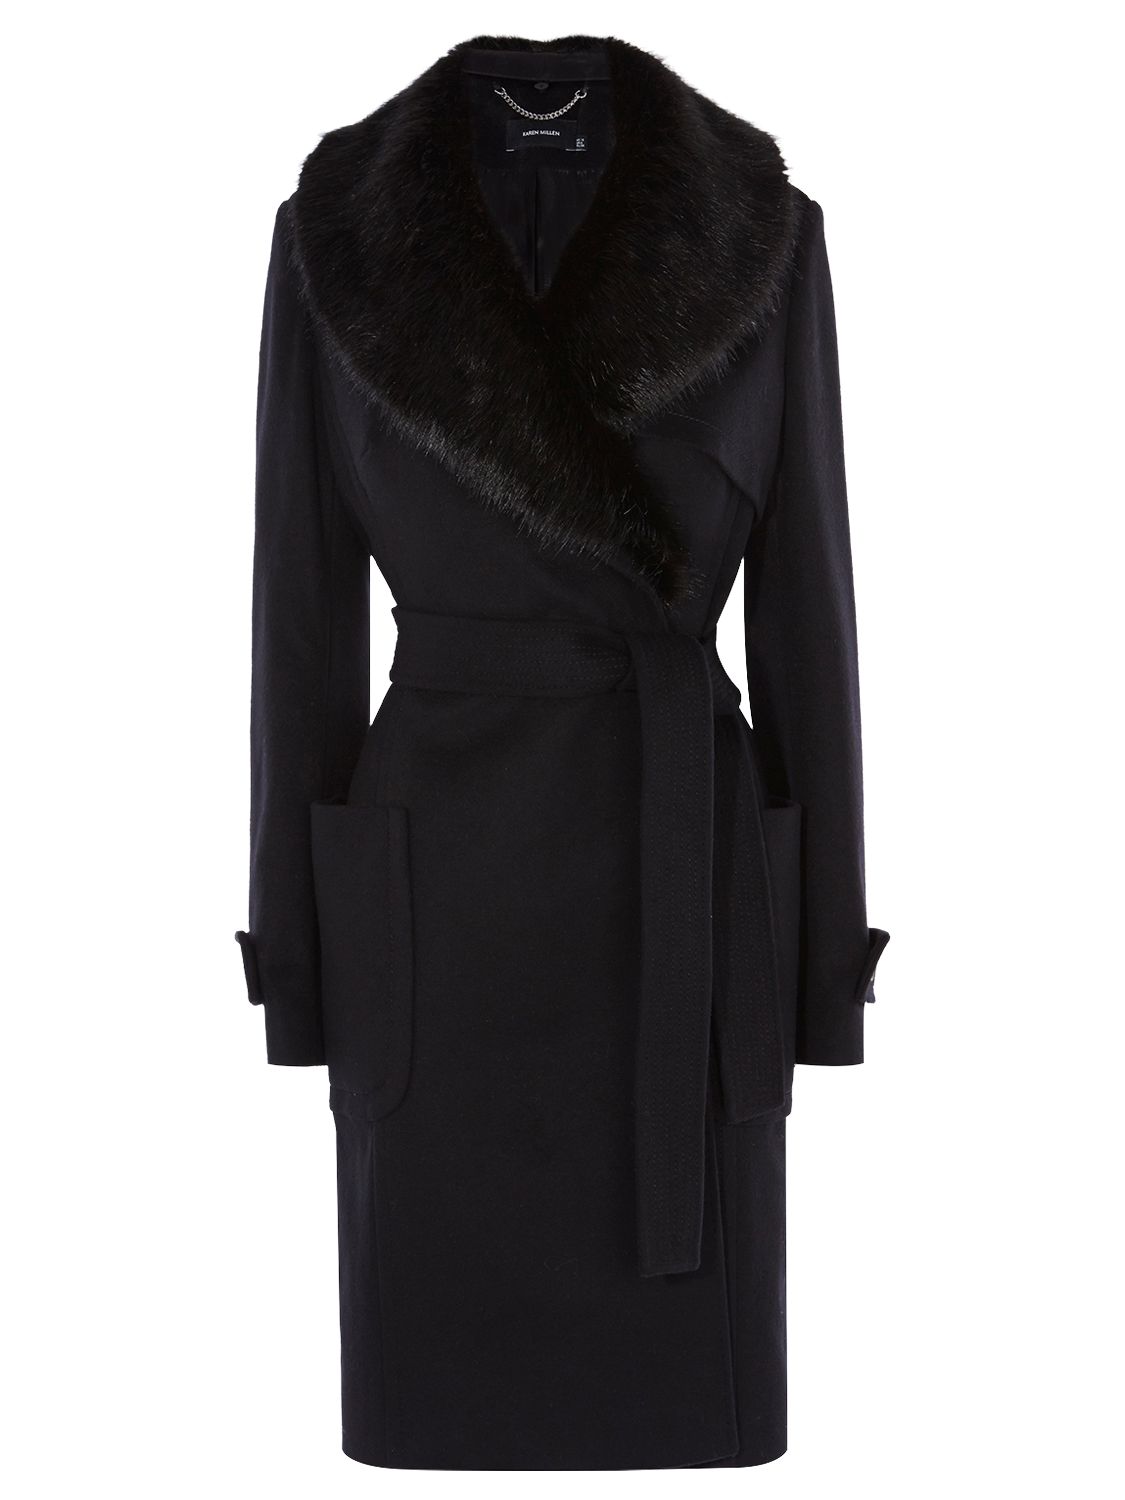 Karen Millen Investment Wool Coat, Black at John Lewis & Partners